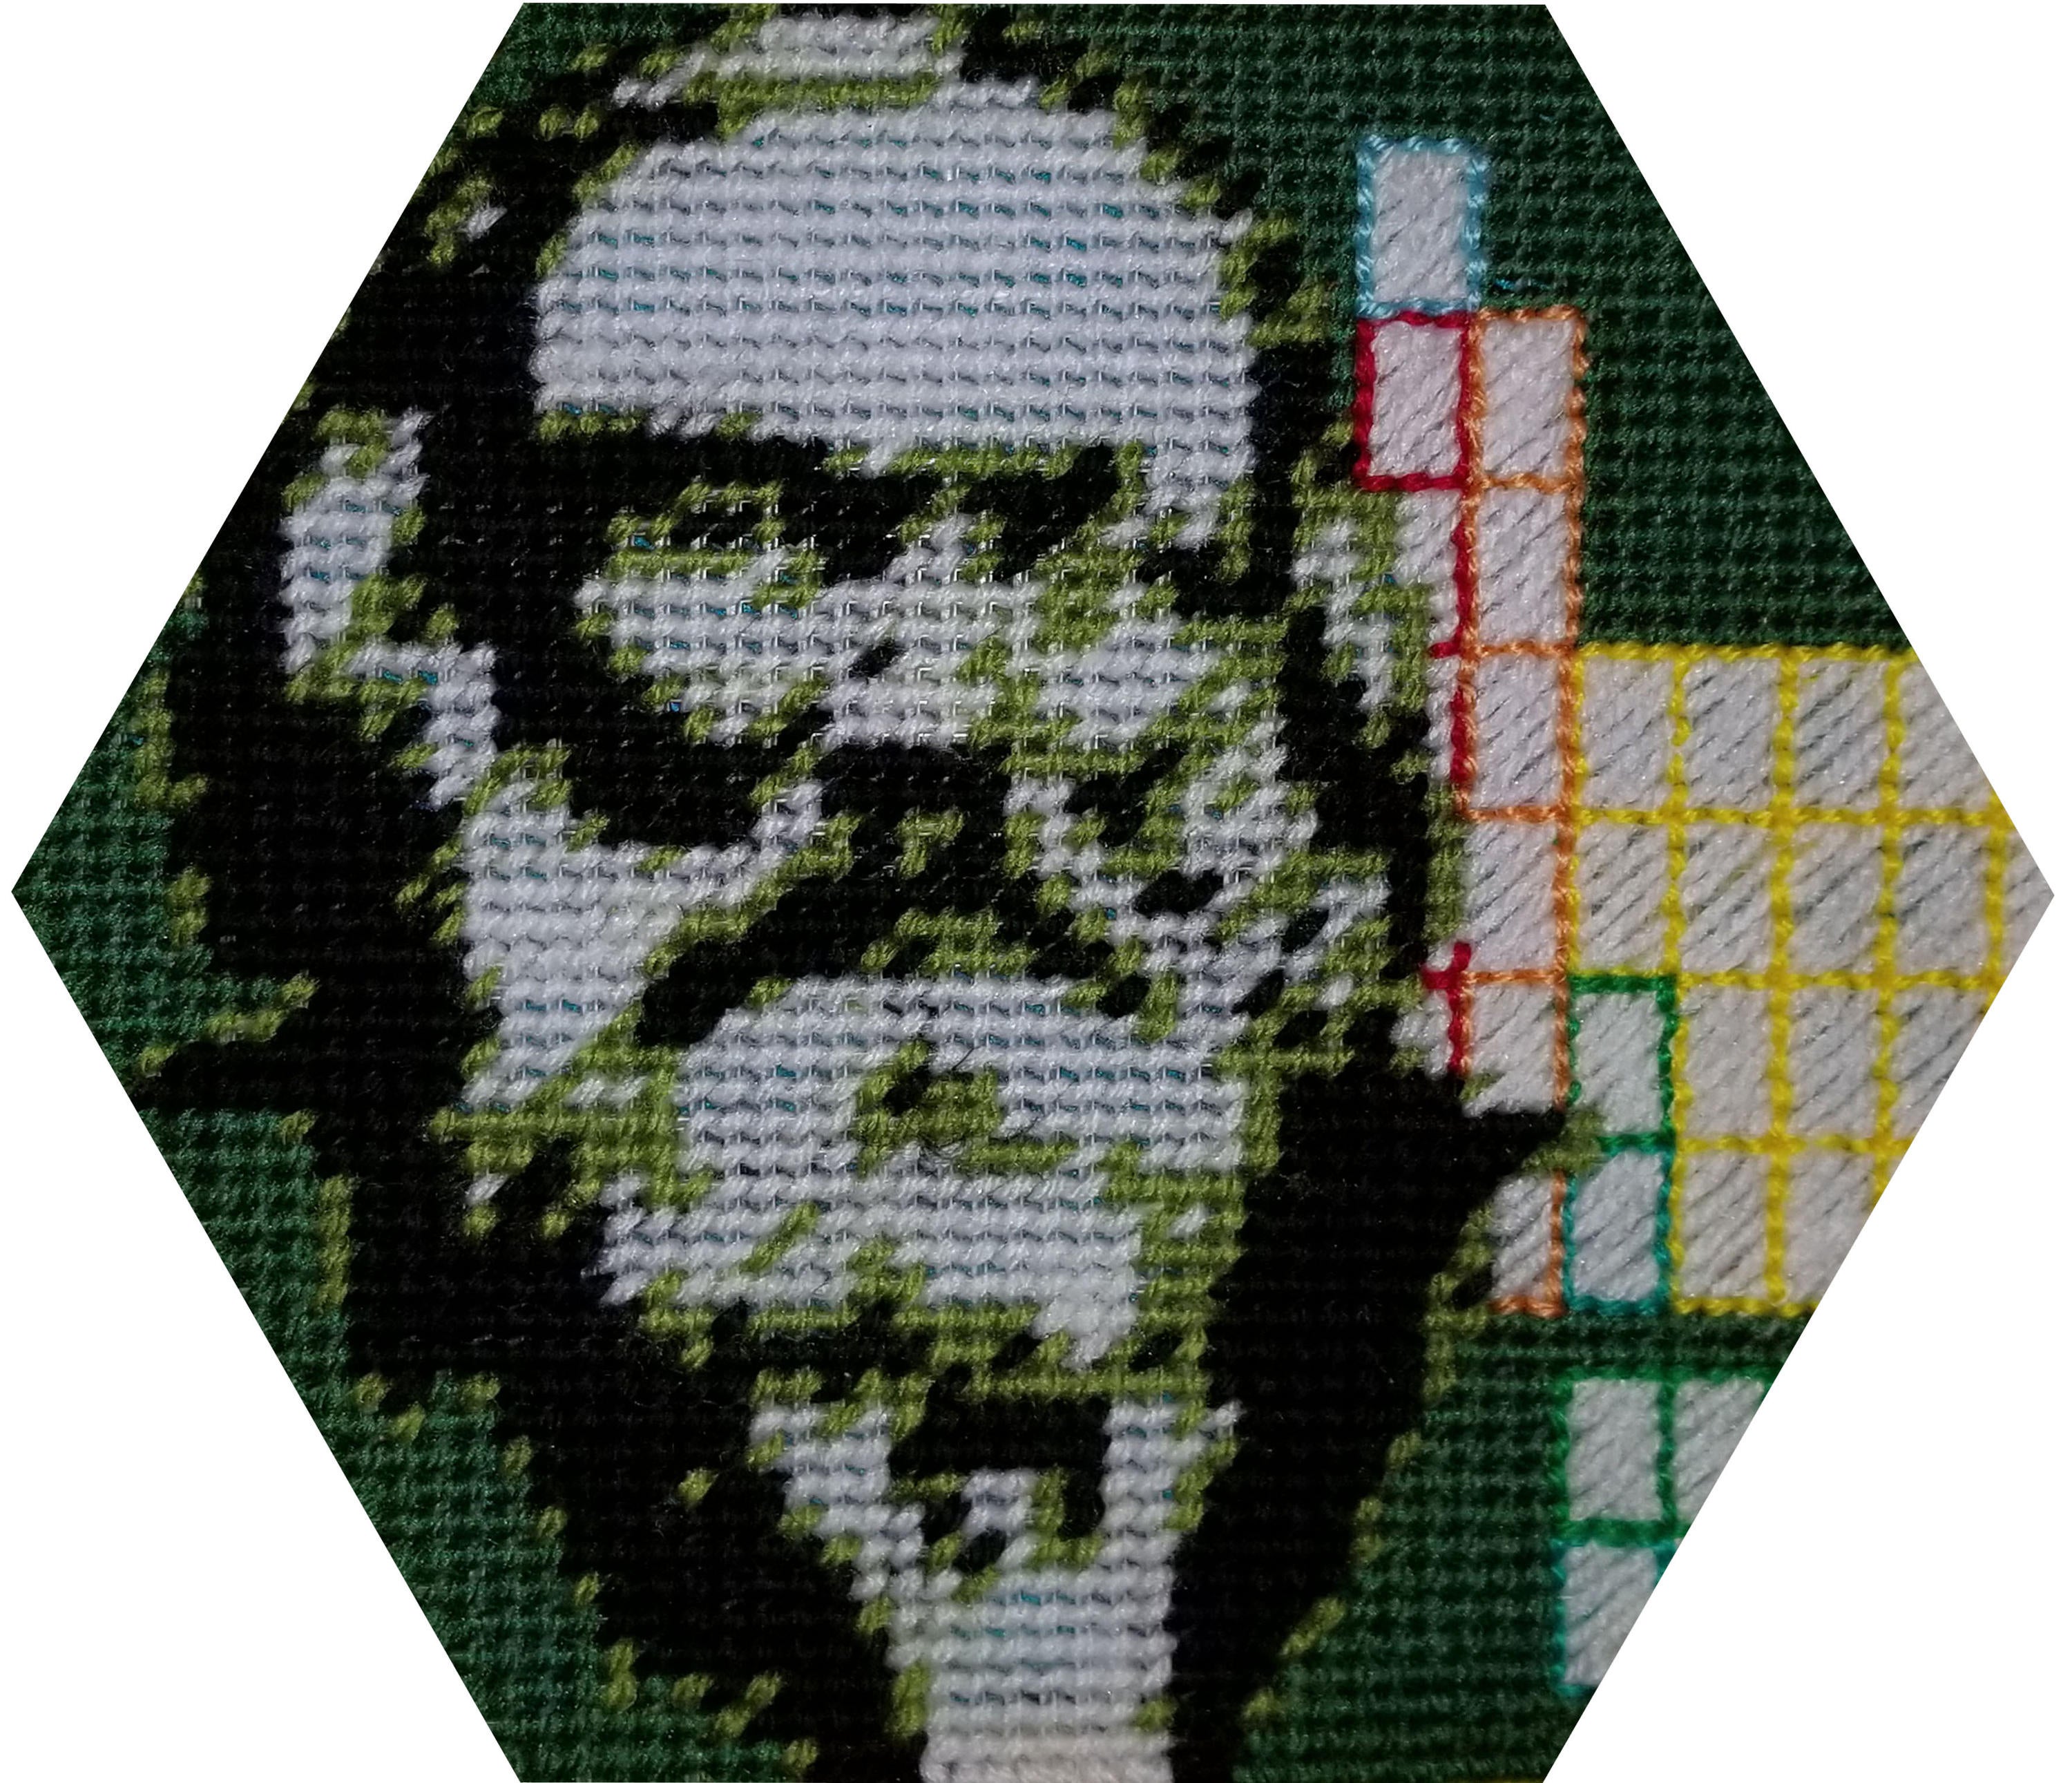 Mendeleev potrait cross-stitched